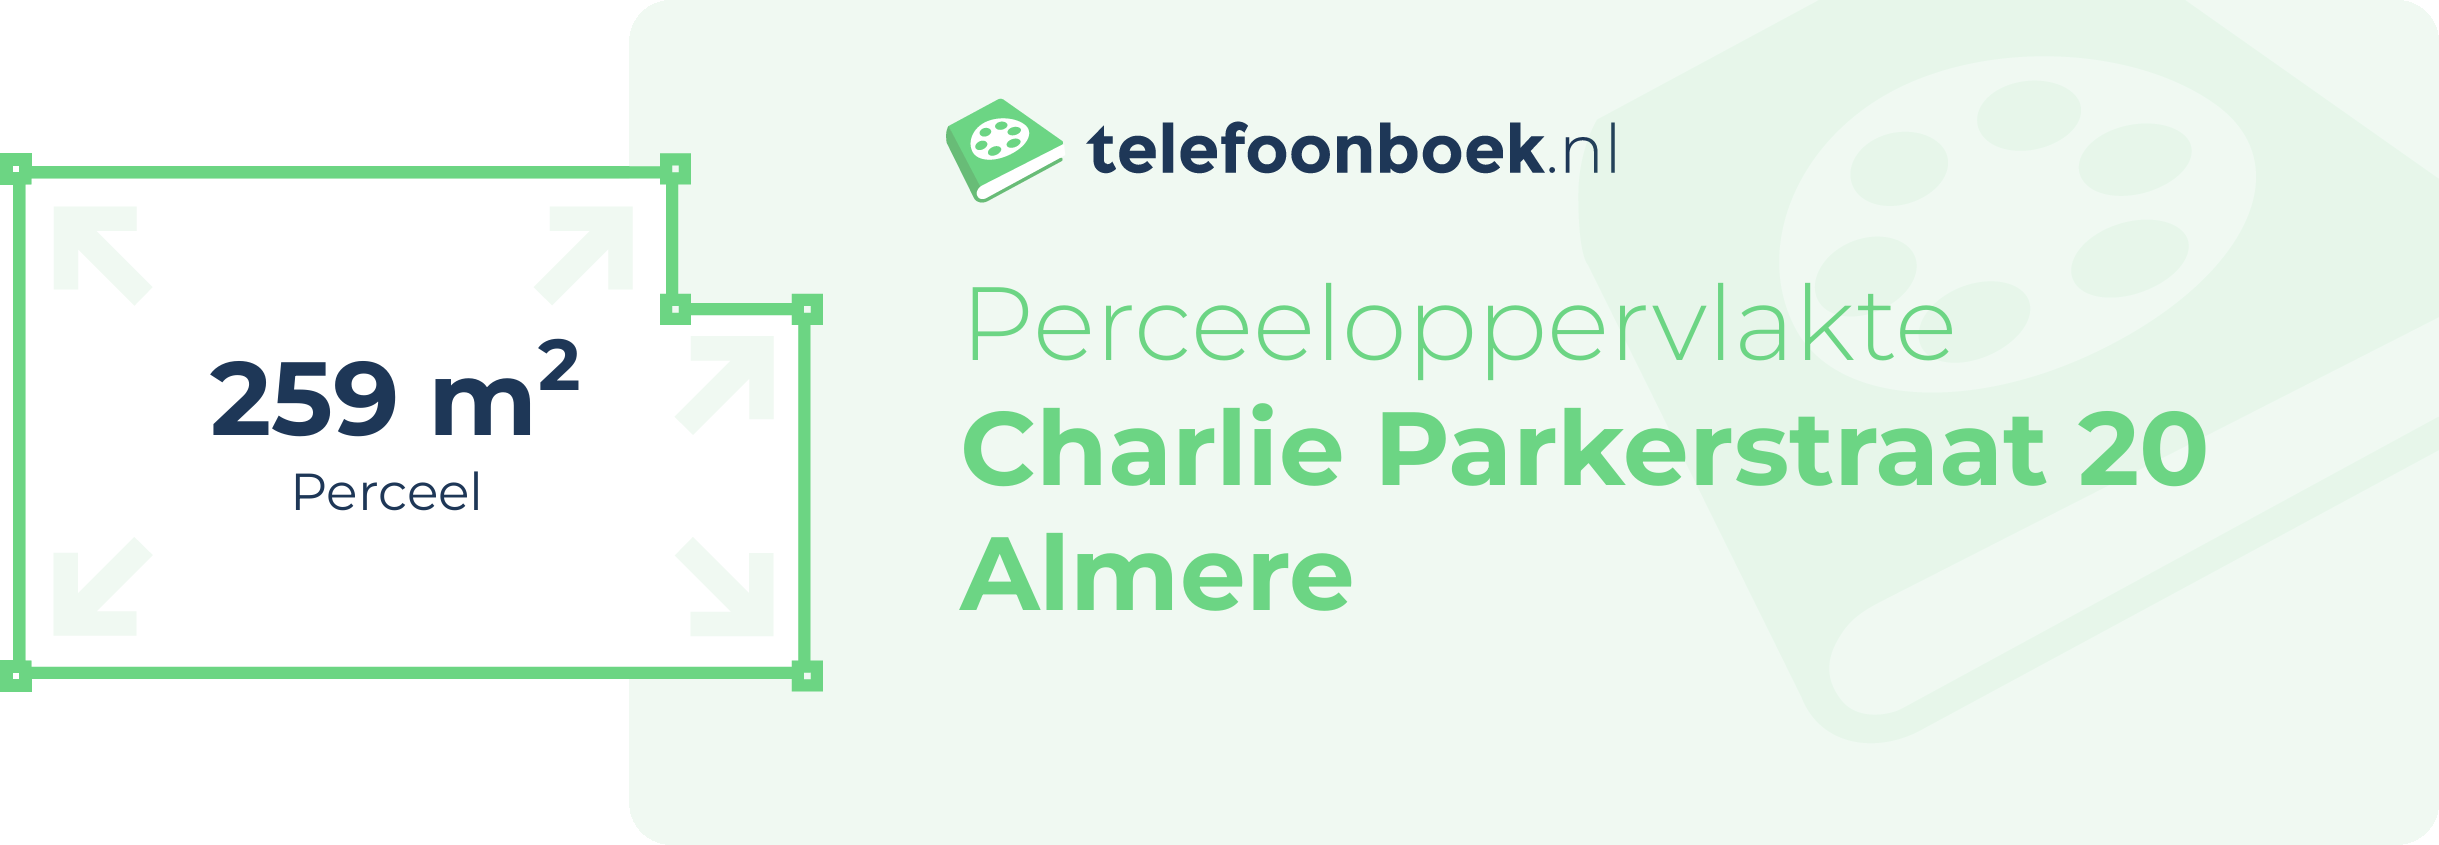 Perceeloppervlakte Charlie Parkerstraat 20 Almere